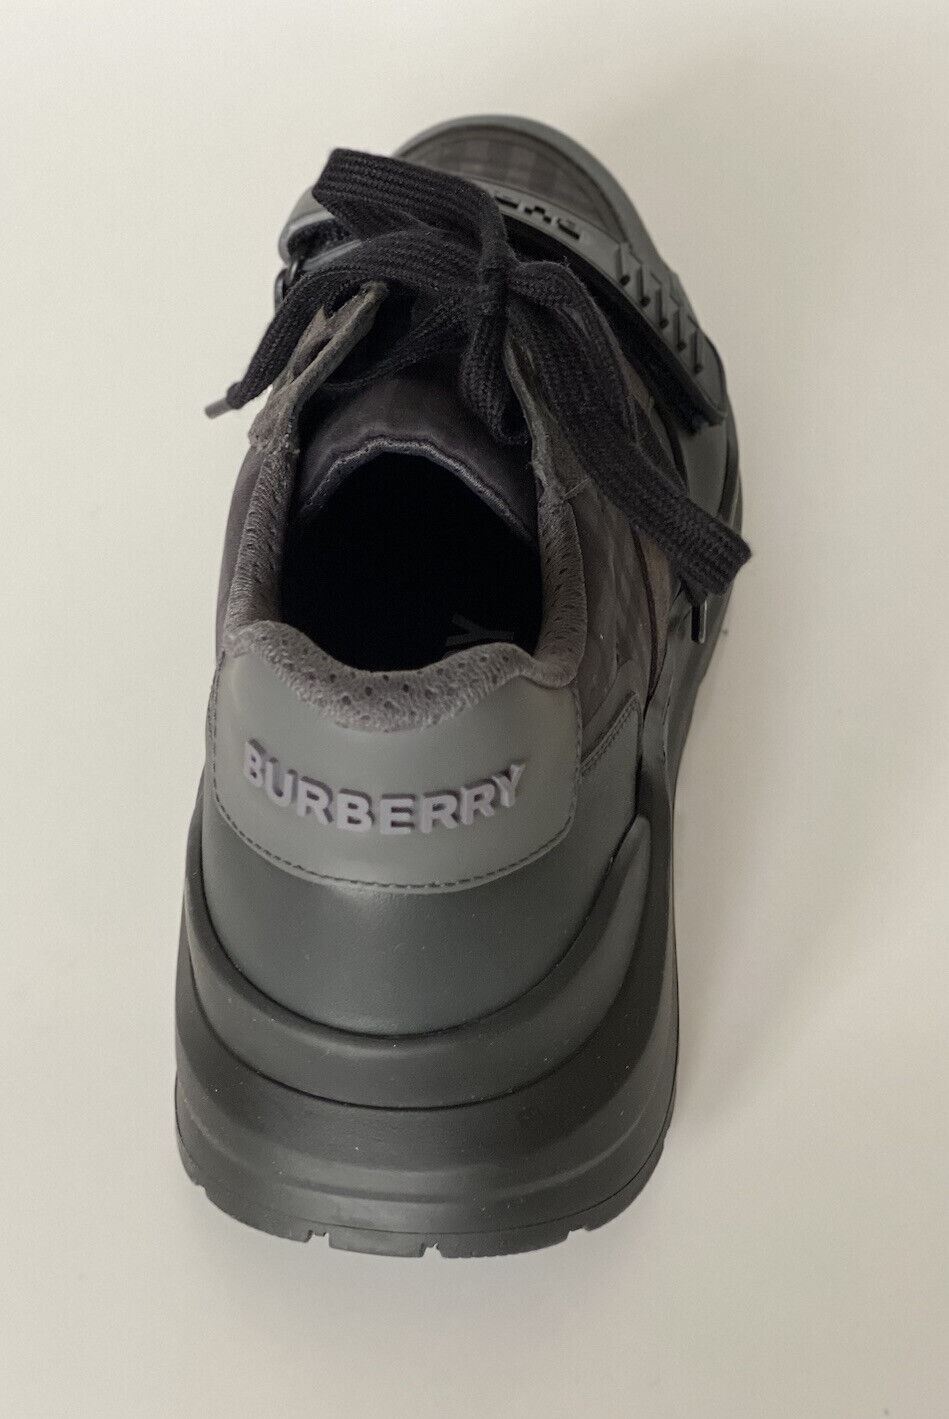 NIB Burberry Ramsey Check Men's Dark Charcoal Sneakers 13 US (46 Eu) 8042200 IT